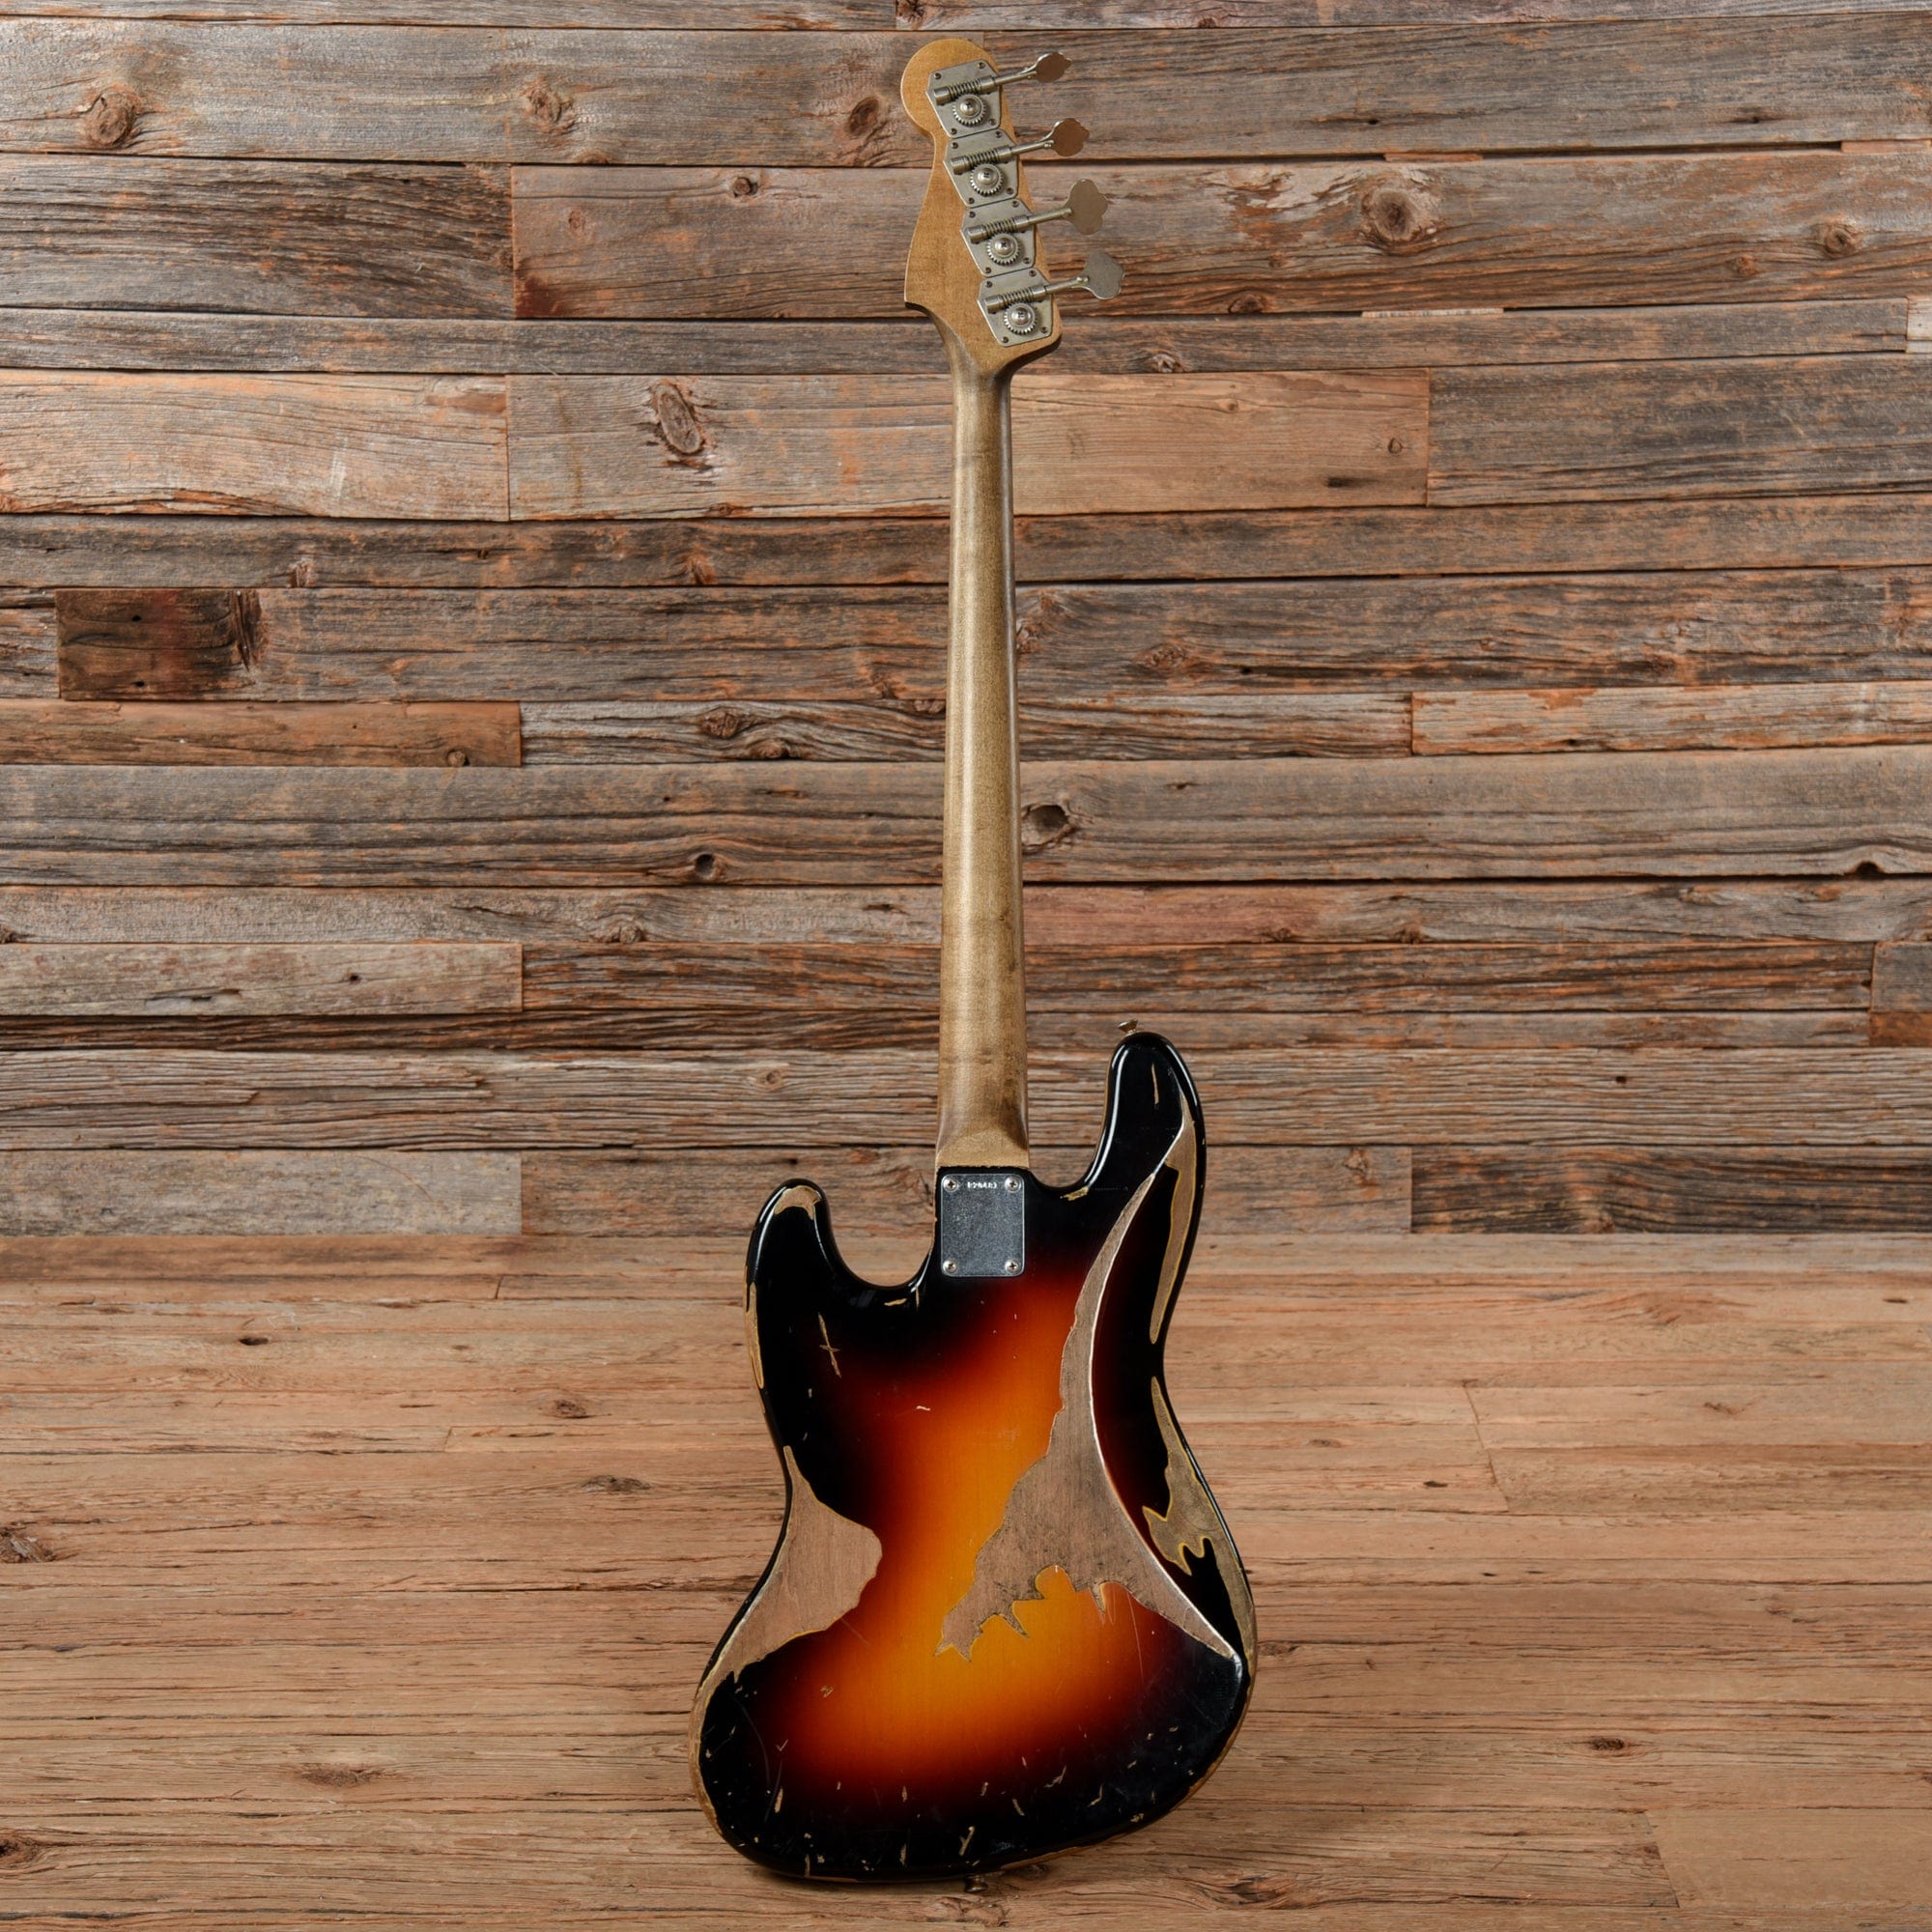 Fender Custom Shop Jaco Pastorius Tribute Jazz Bass Relic Sunburst 2005 Bass Guitars / 4-String